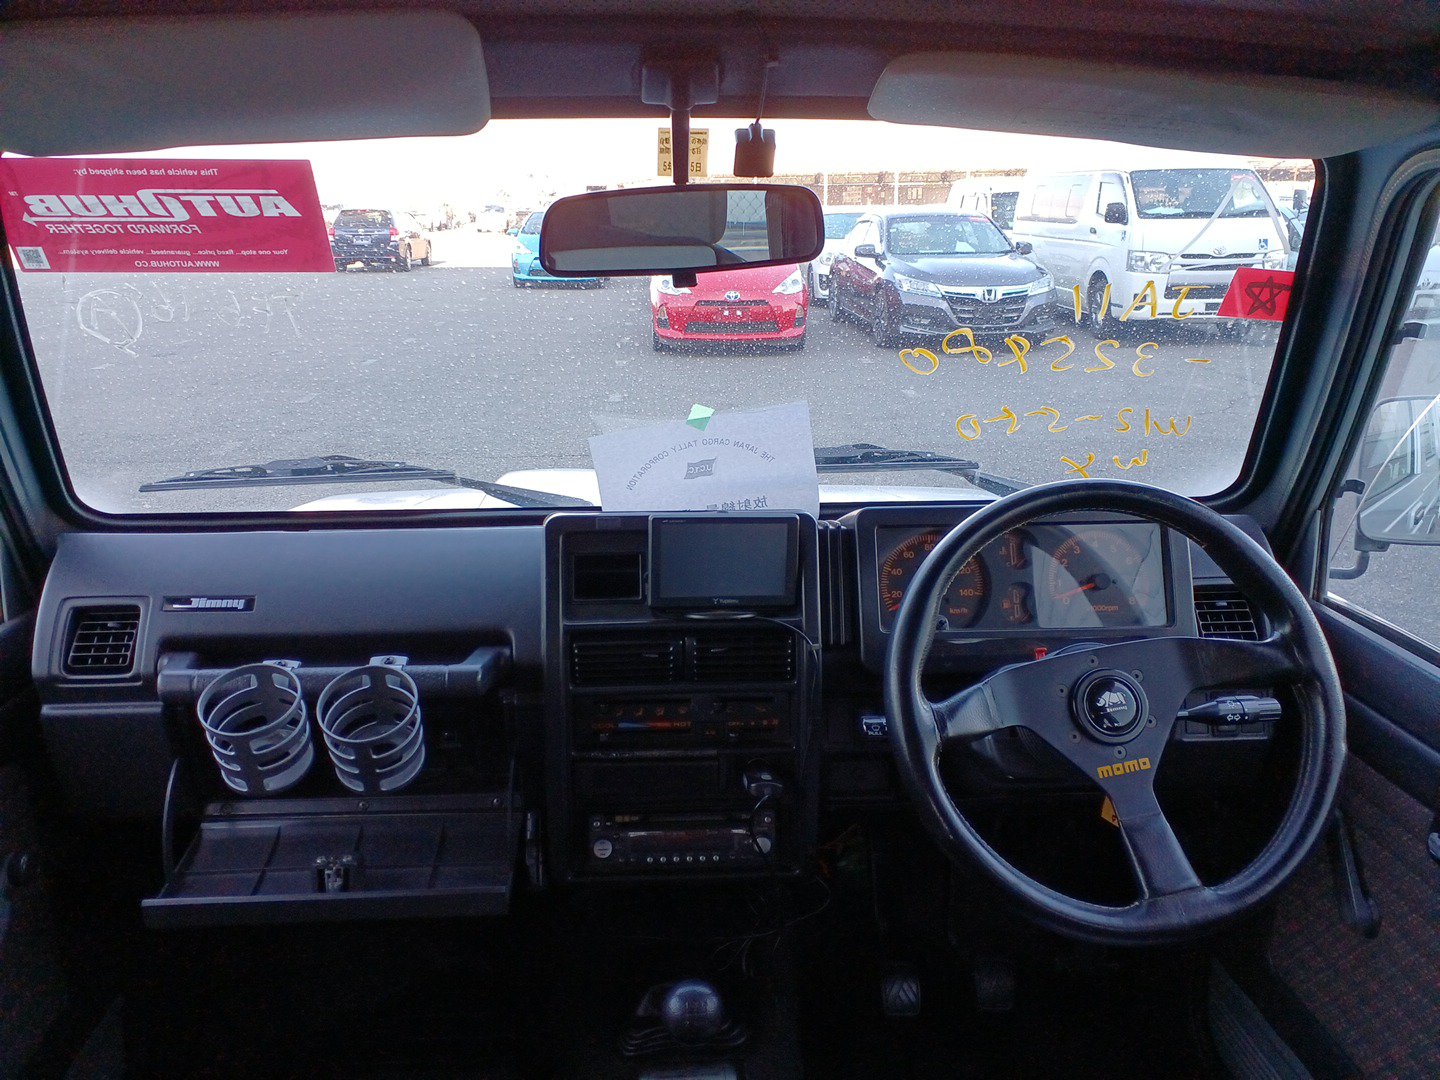 Suzuki Jimny - 1995